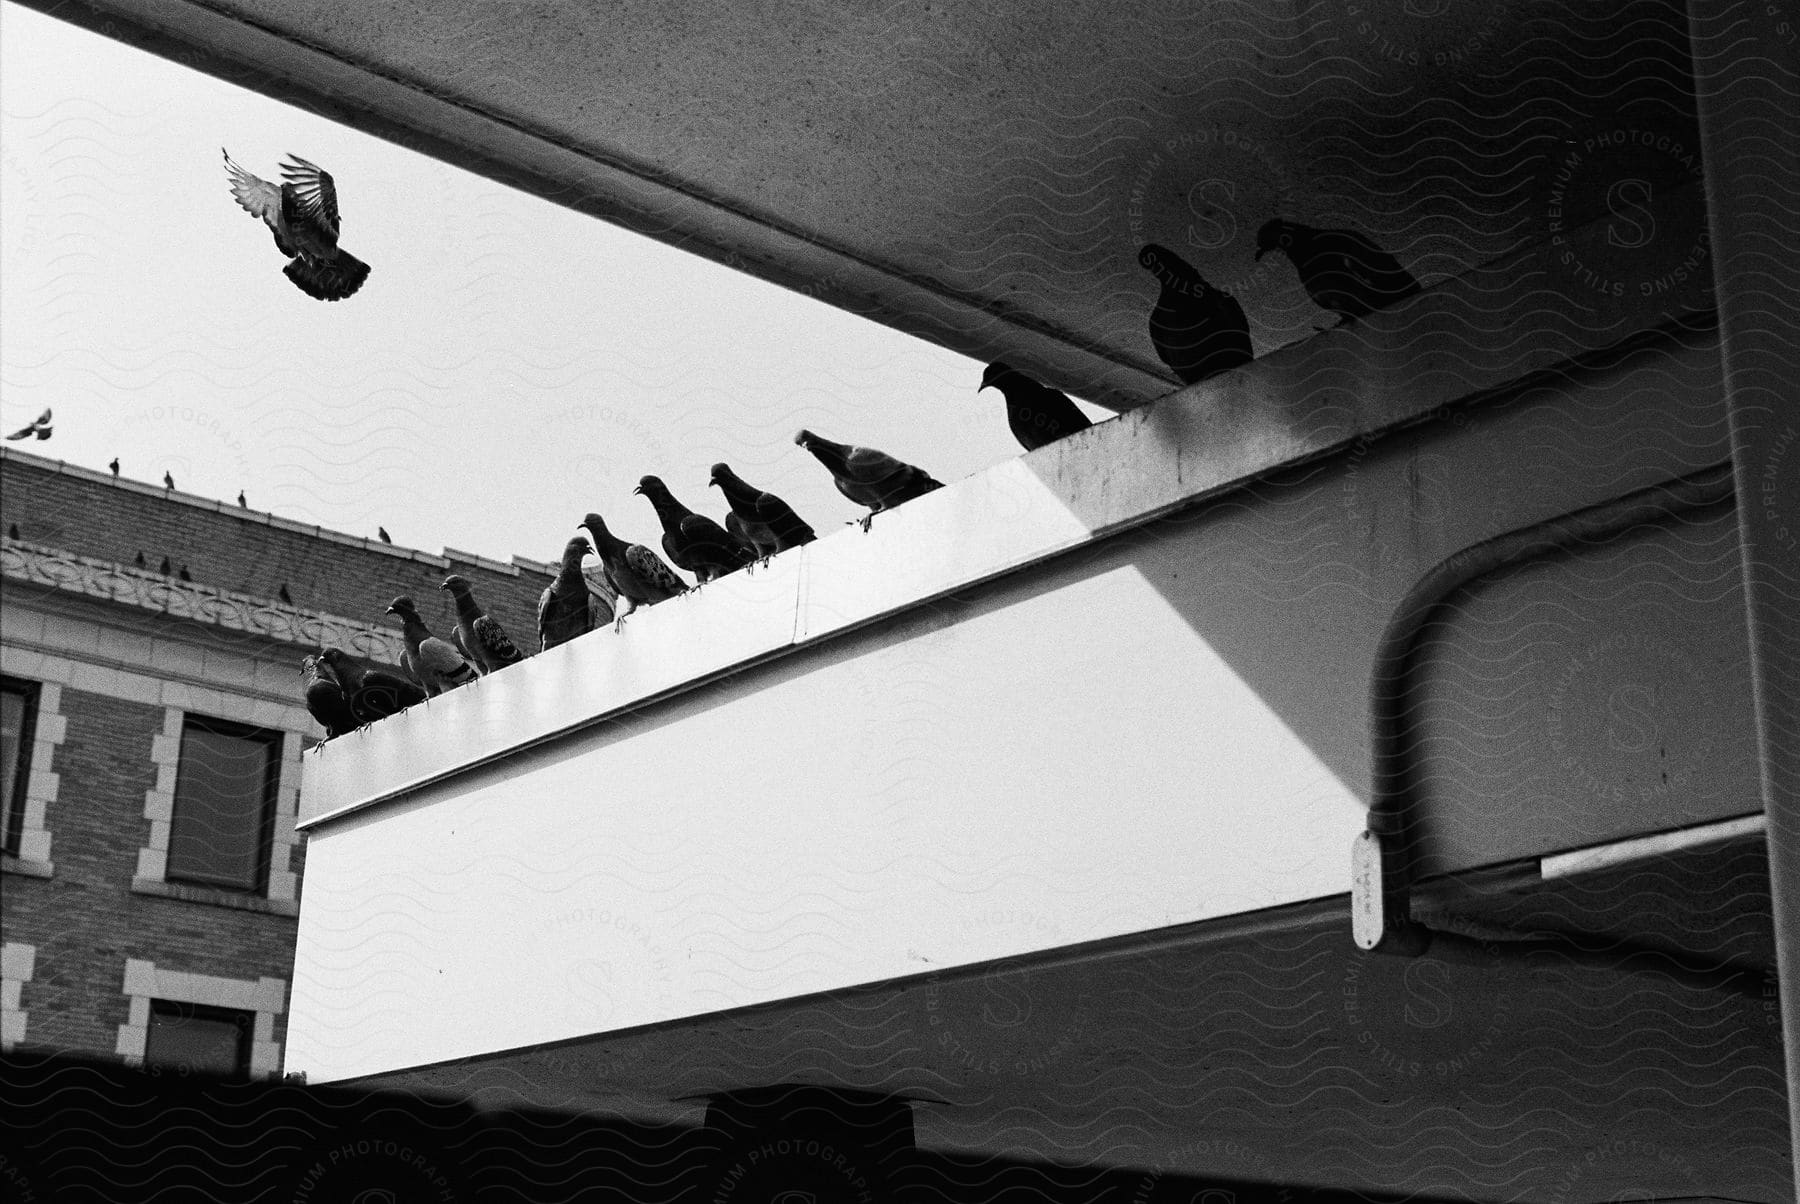 Pigeons perch on ledge near apartment building